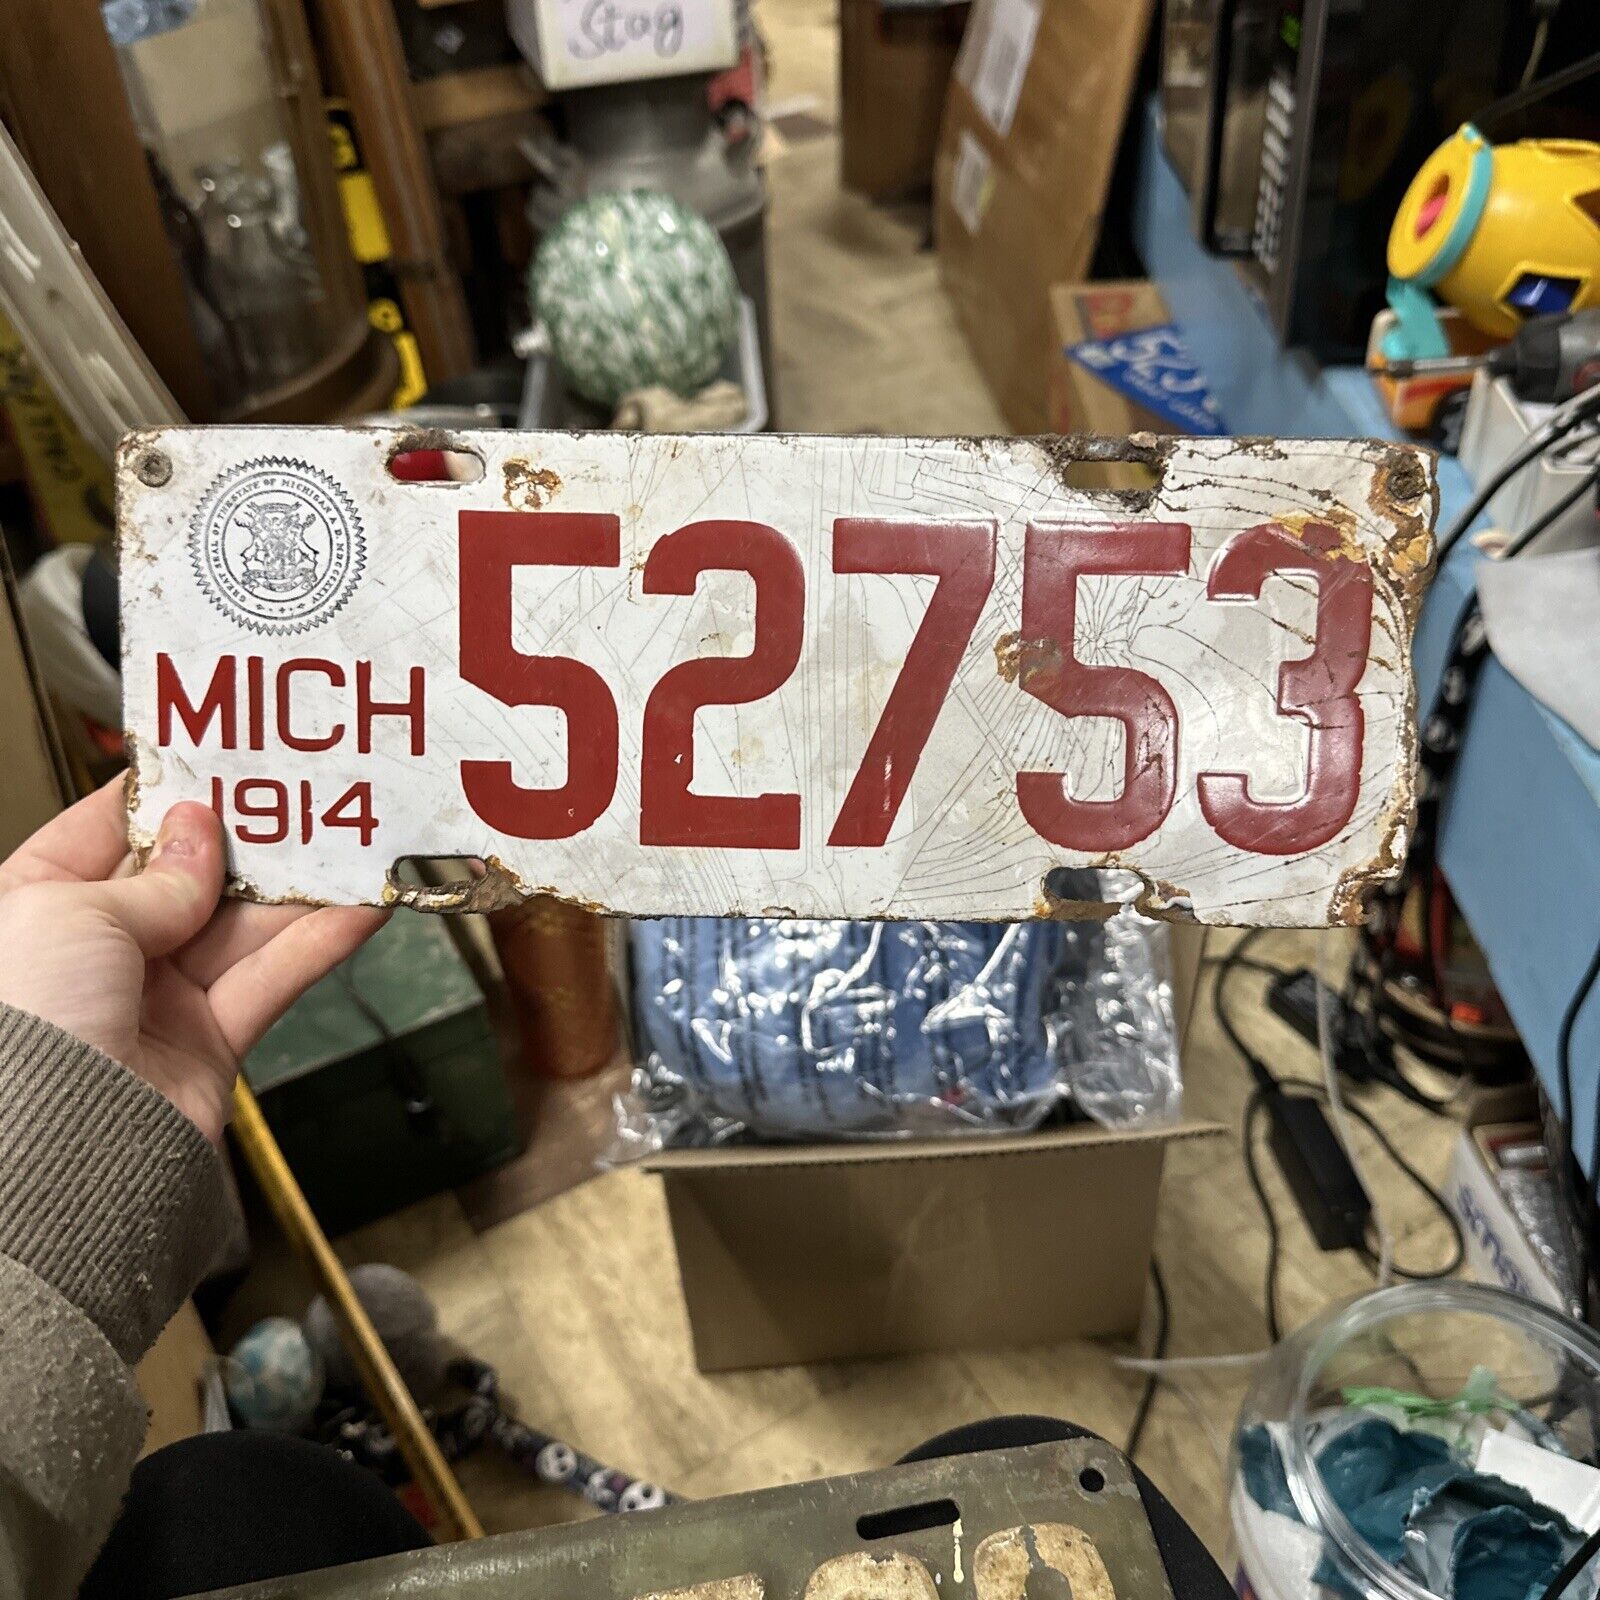 1914 Michigan Porcelain License Plate 52753